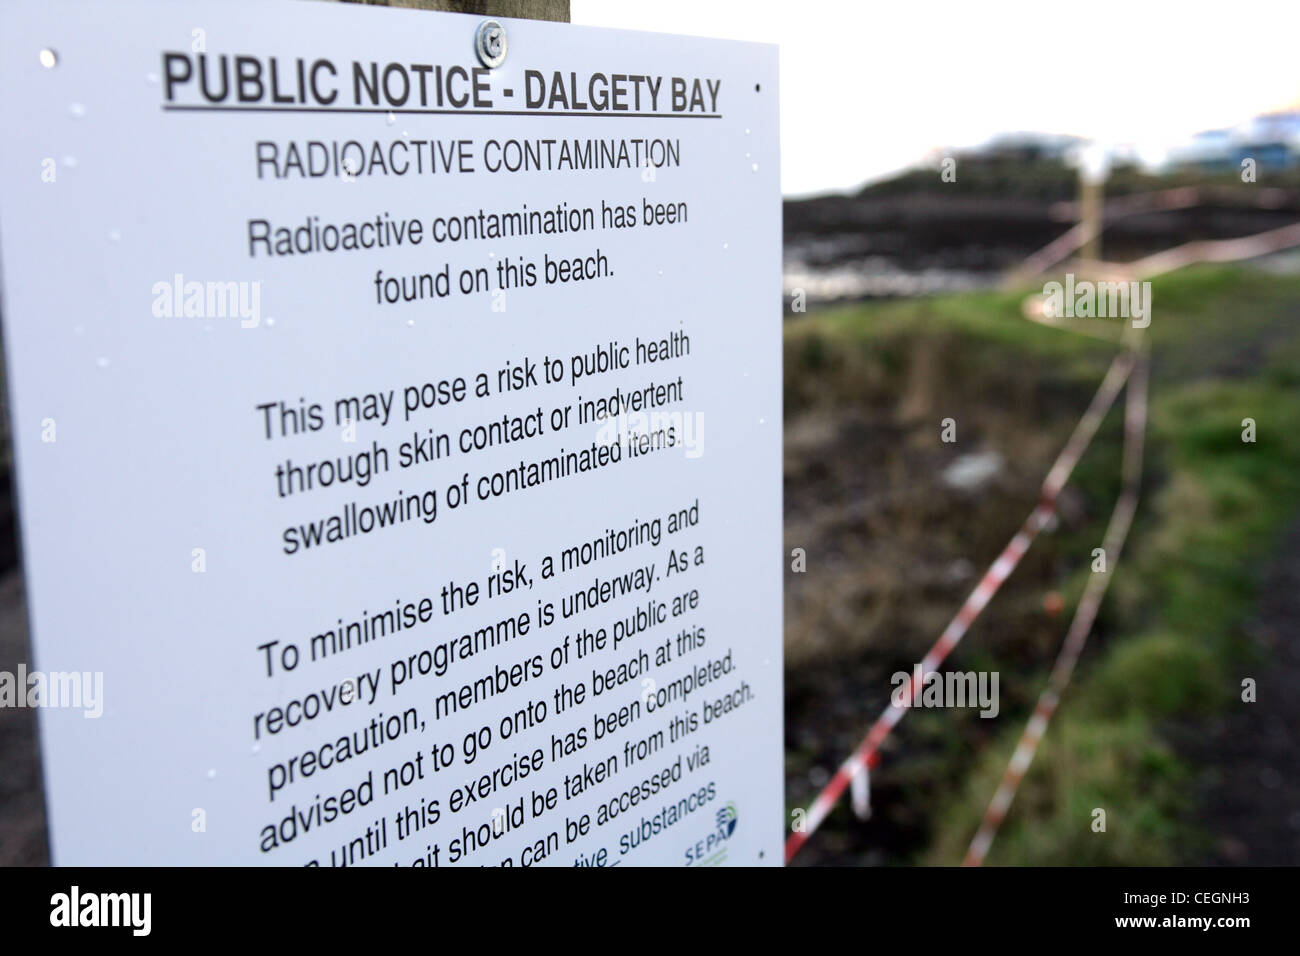 Public Notice of radioactive contamination along coast. Stock Photo